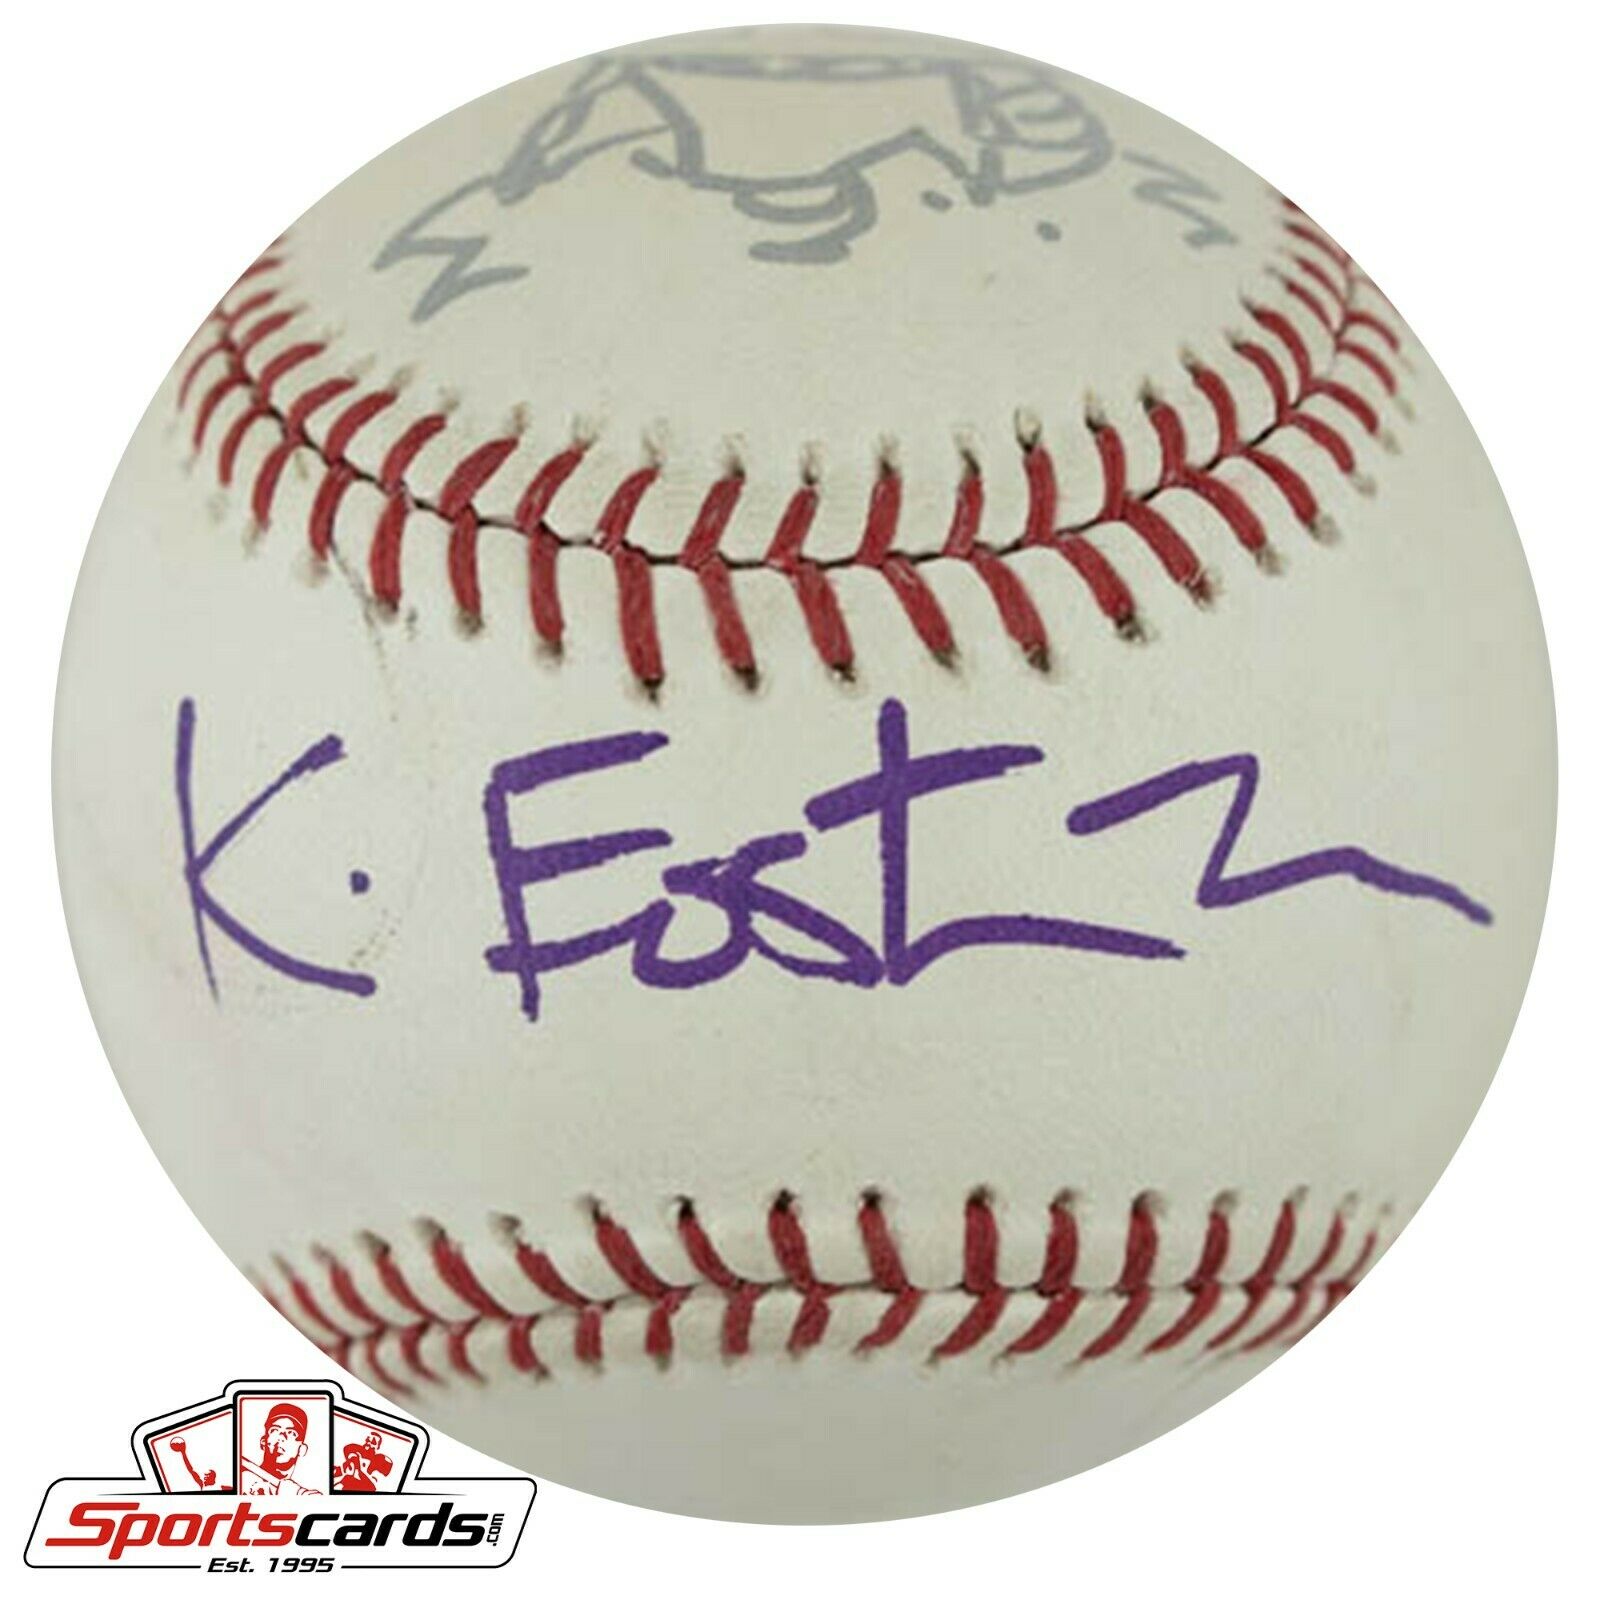 TMNT Kevin Eastman Signed PCL Baseball JSA COA + Shredder Sketch